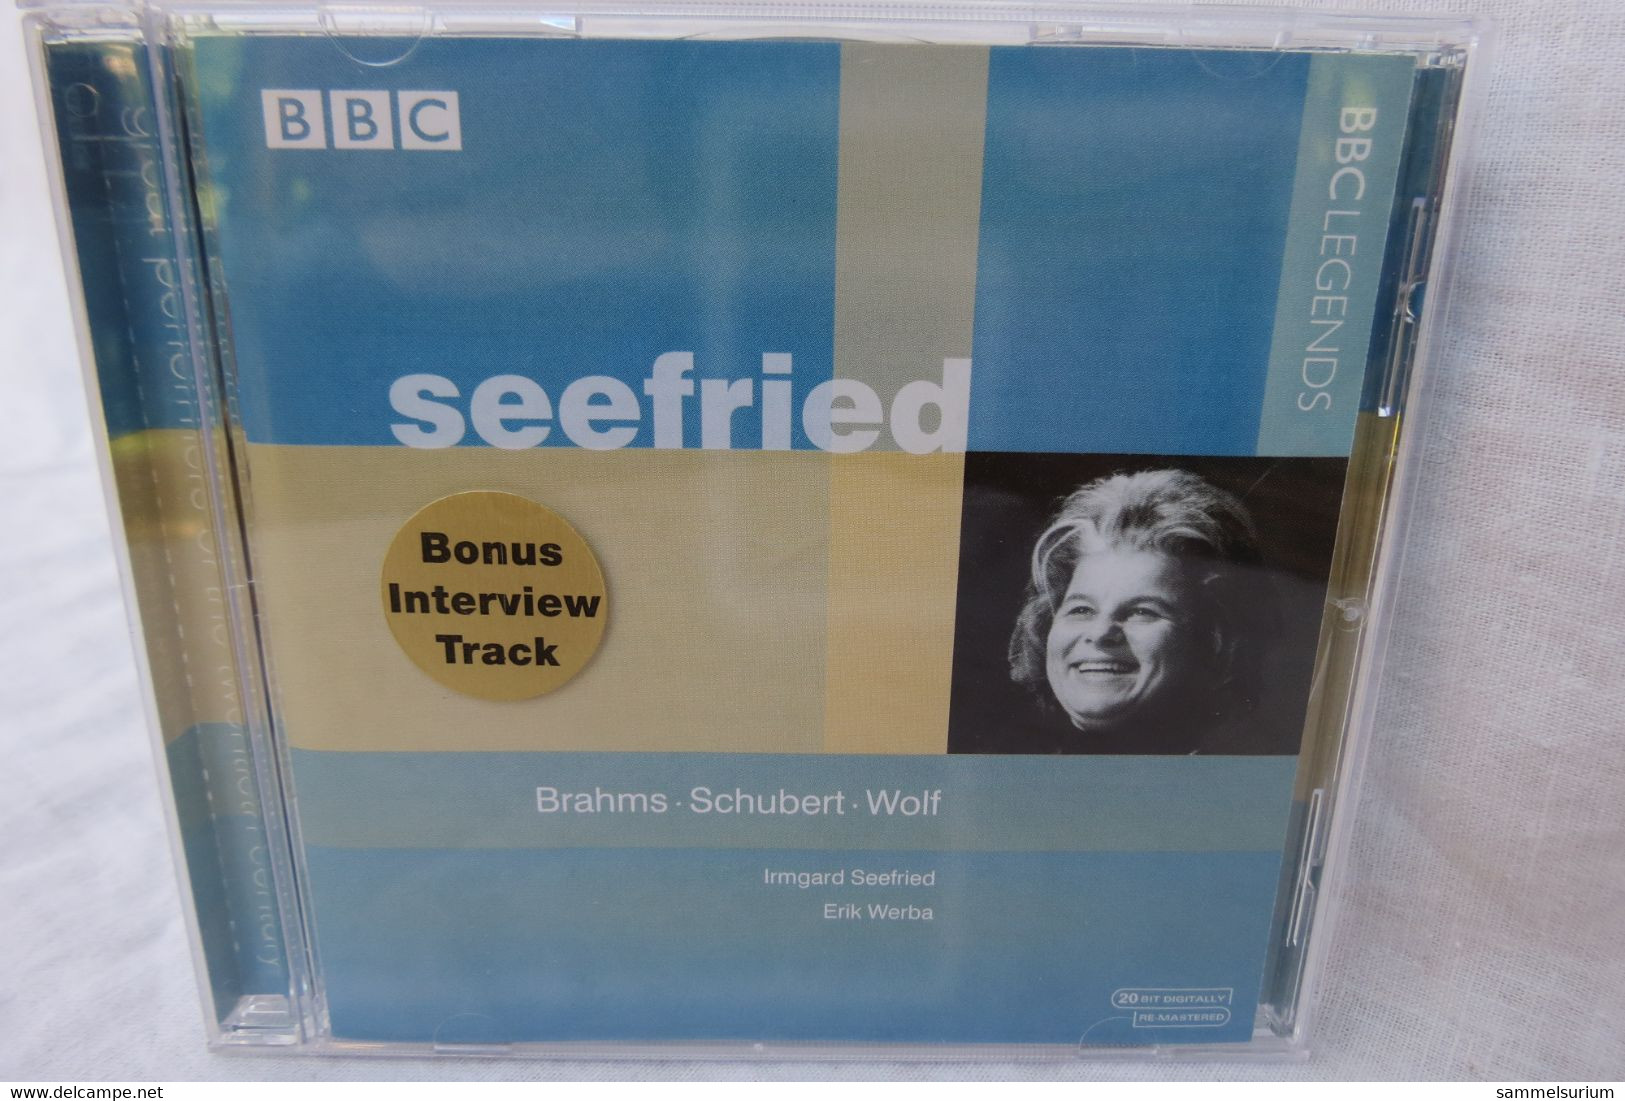 CD "Irmgard Seefried" Brahms, Schubert, Wolf, BBC Legenden - Opere